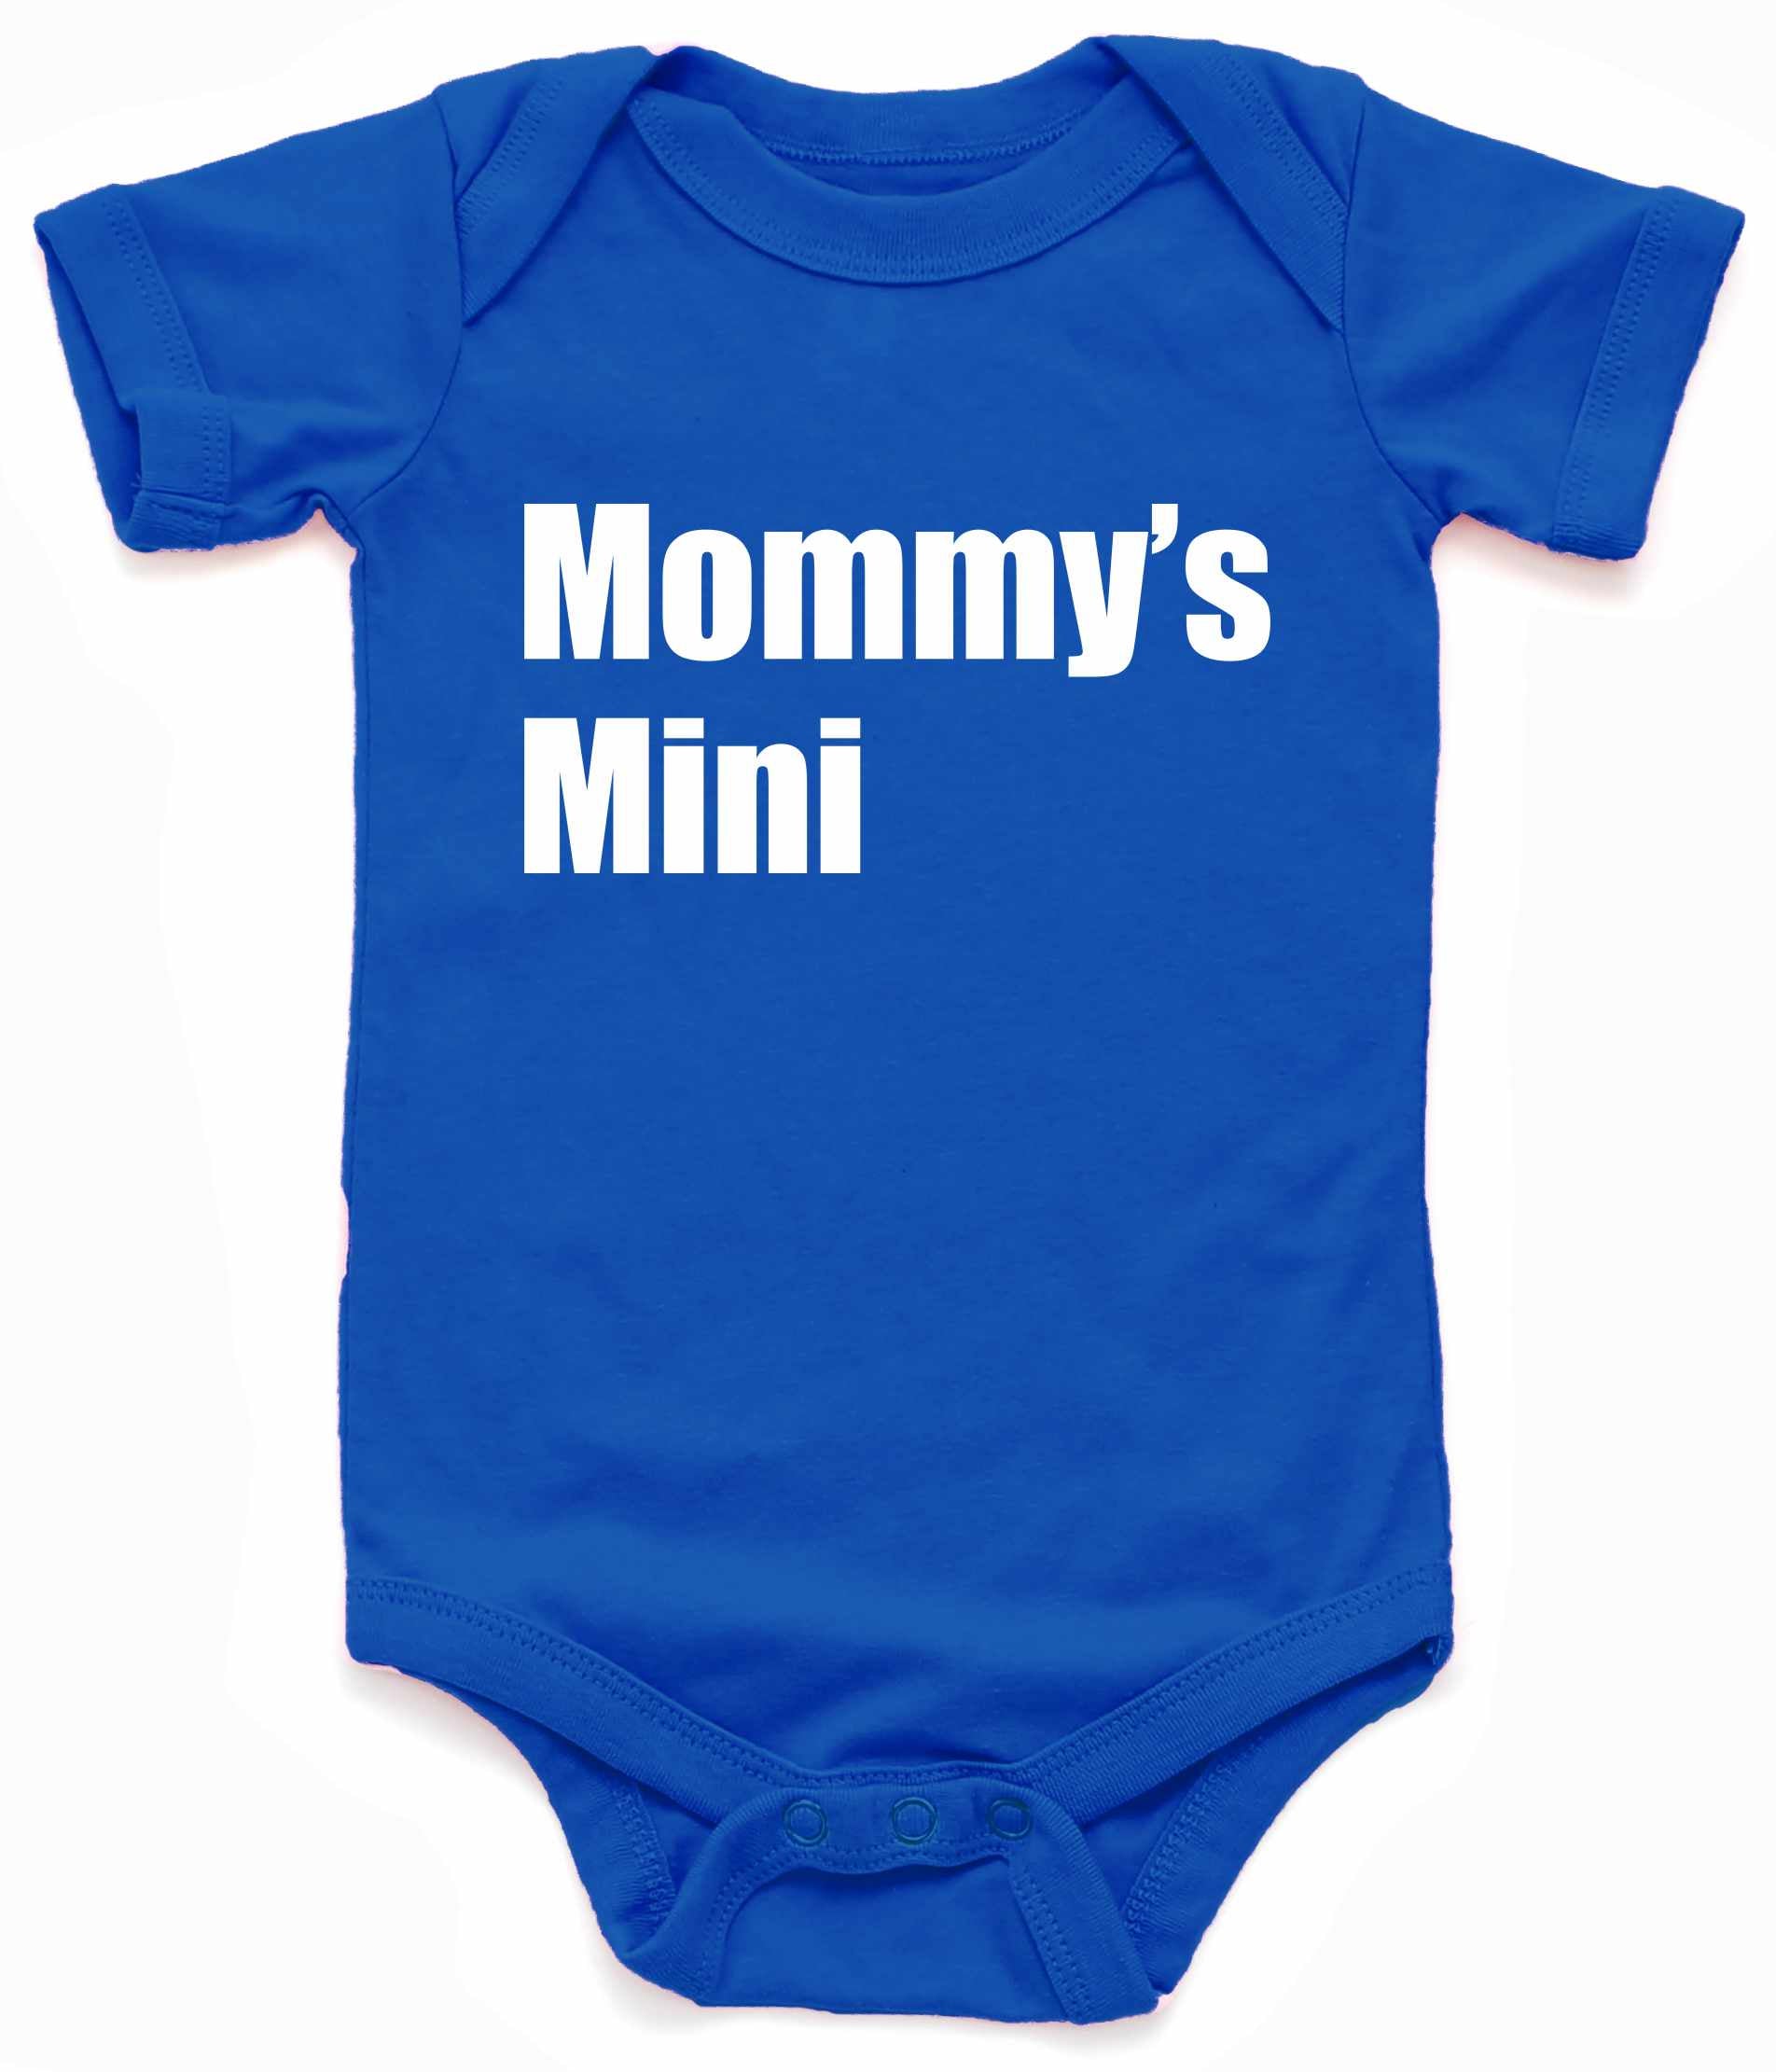 Mommy's Mini Infant BodySuit - Royal Blue / NewBorn - Royal Blue / 6 Month - Royal Blue / 12 Month - Royal Blue / 18 Month - Royal Blue / 24 Month